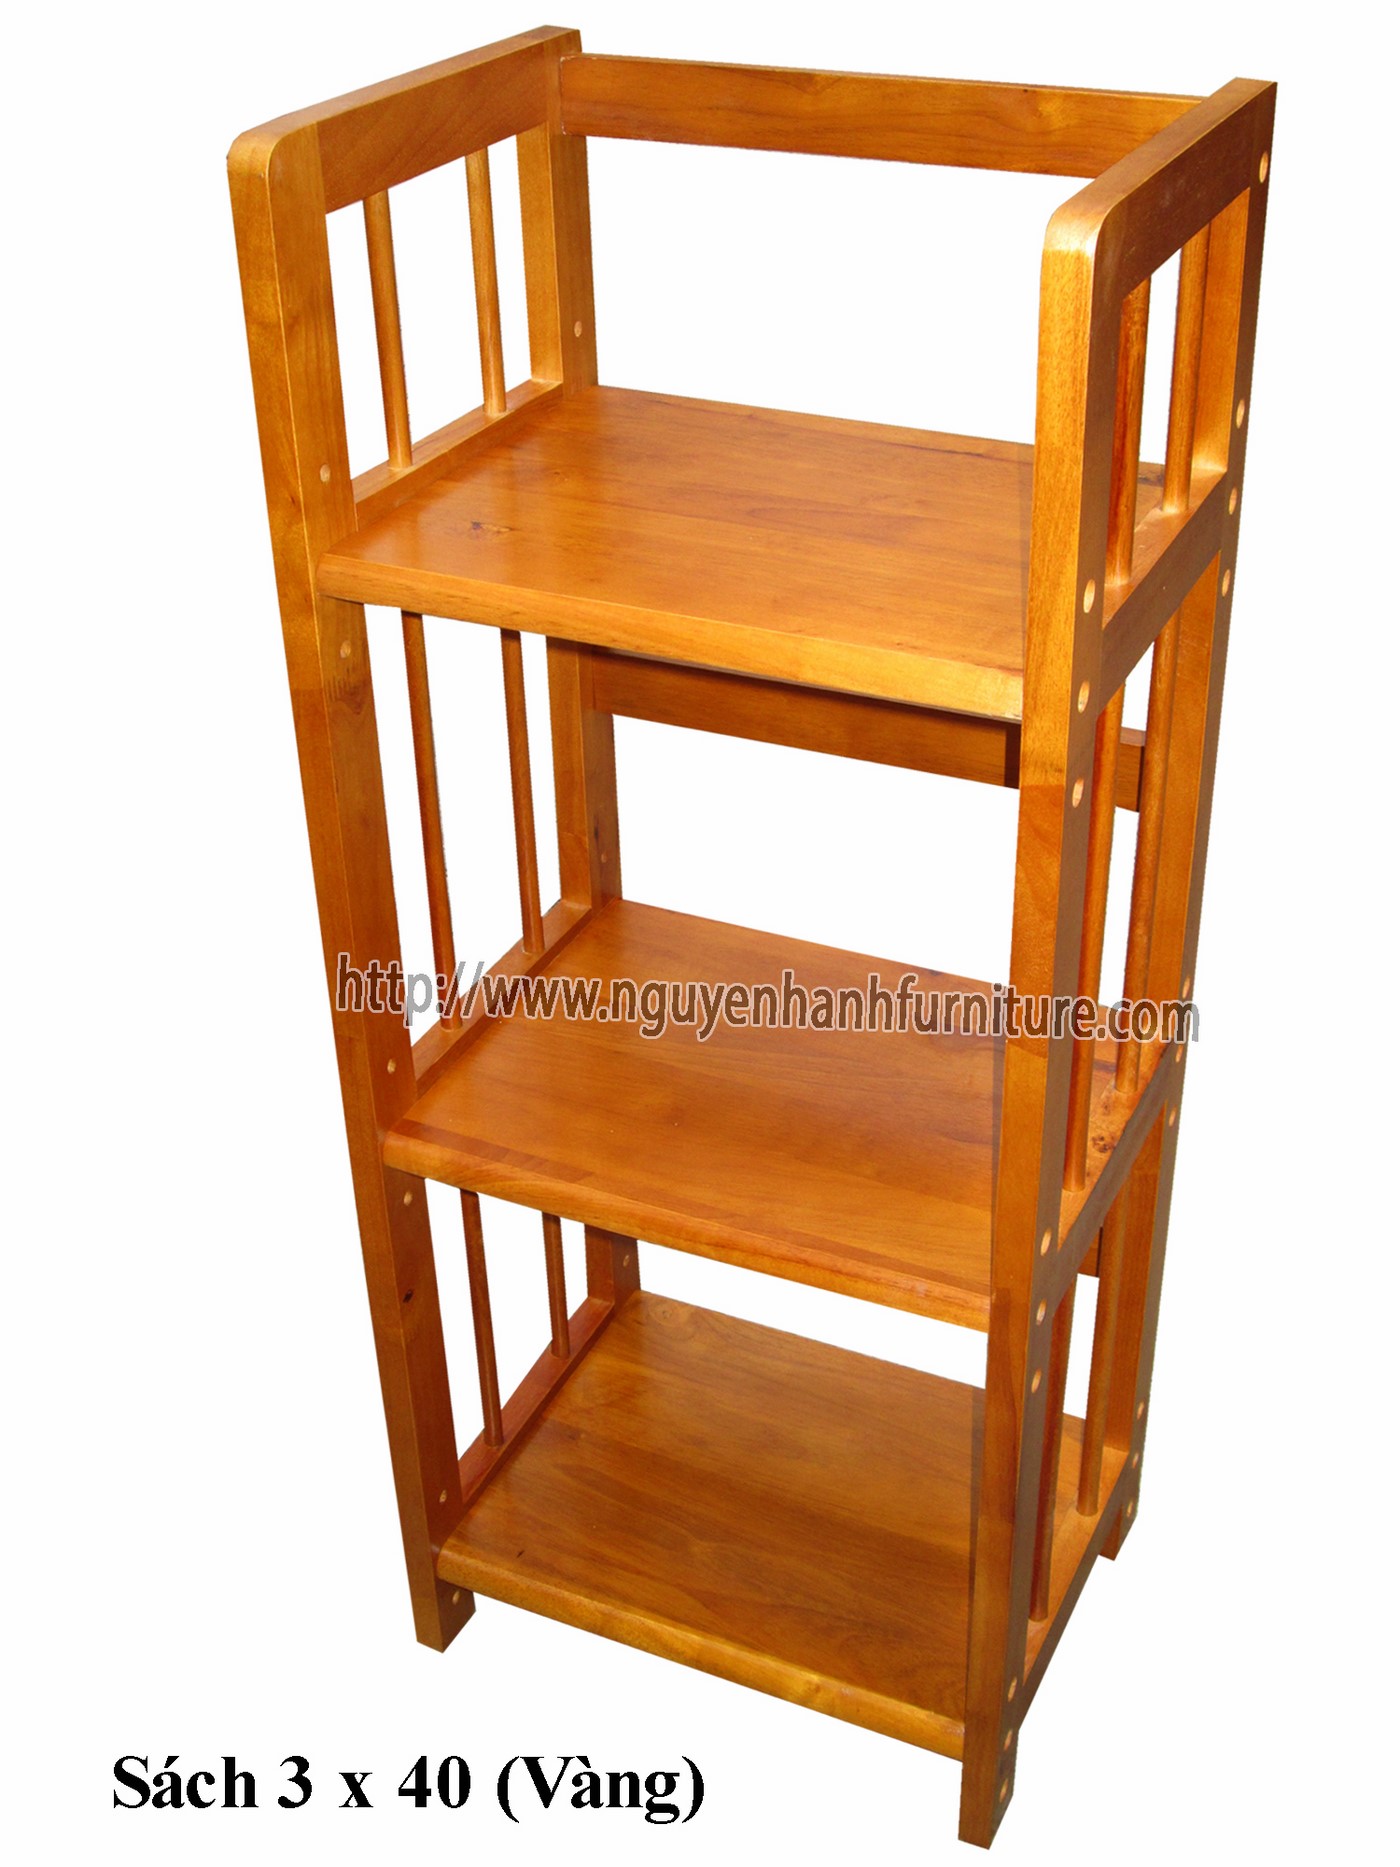 Name product: Triple storey Adjustable Bookshelf 40 (Yellow) - Dimensions: 40 x 28 x 90 (H) - Description: Wood natural rubber